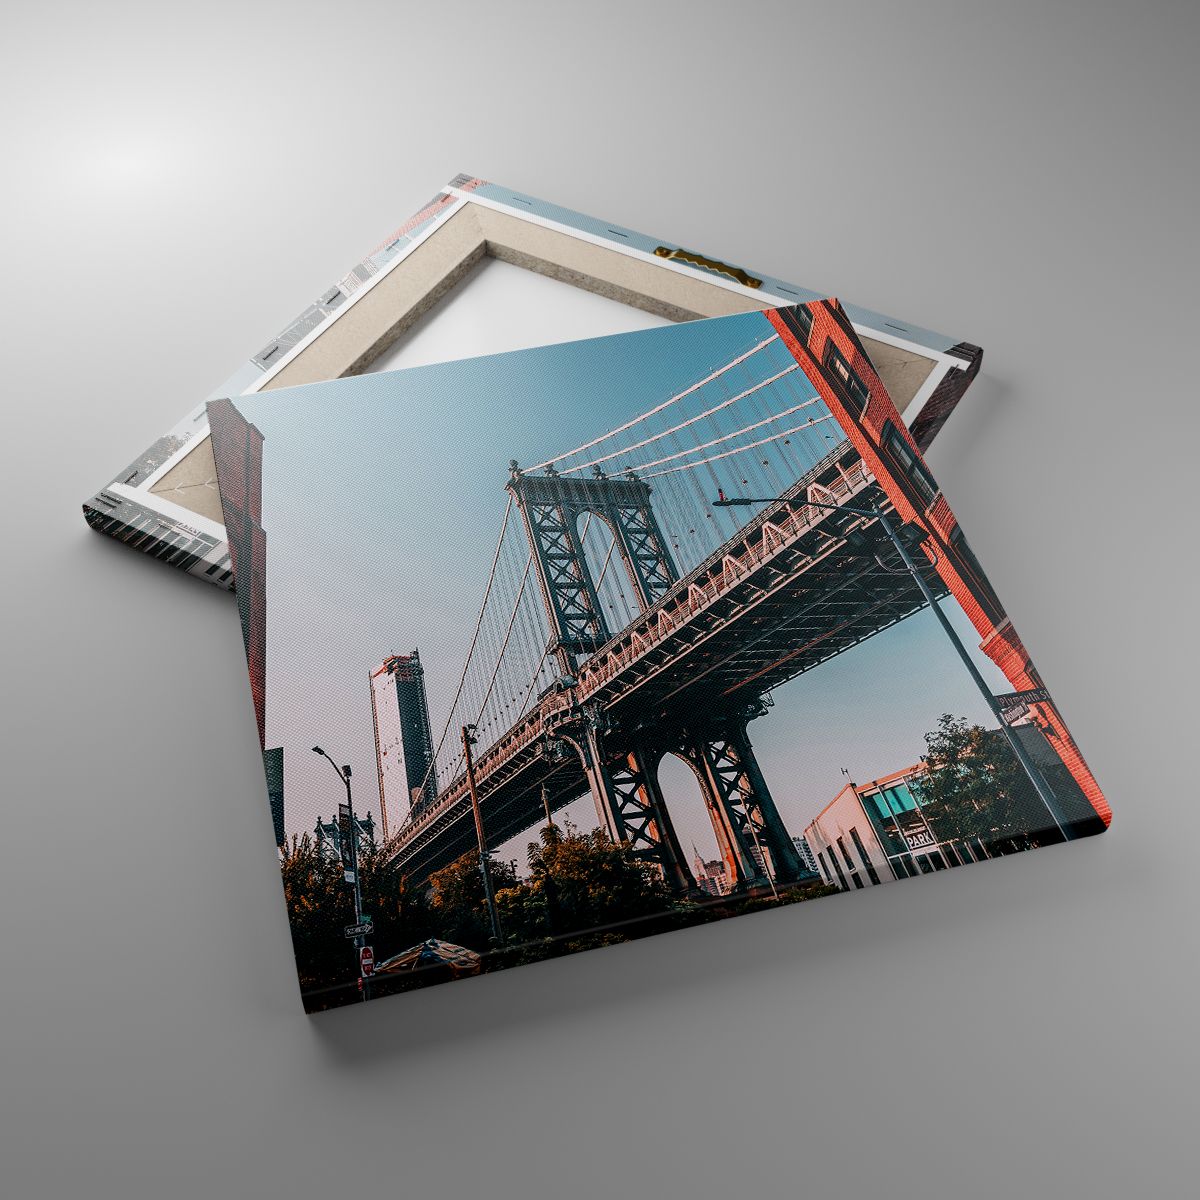 Quadri New York, Quadri Ponte Di Brooklyn, Quadri Architettura, Quadri Città, Quadri Viaggi